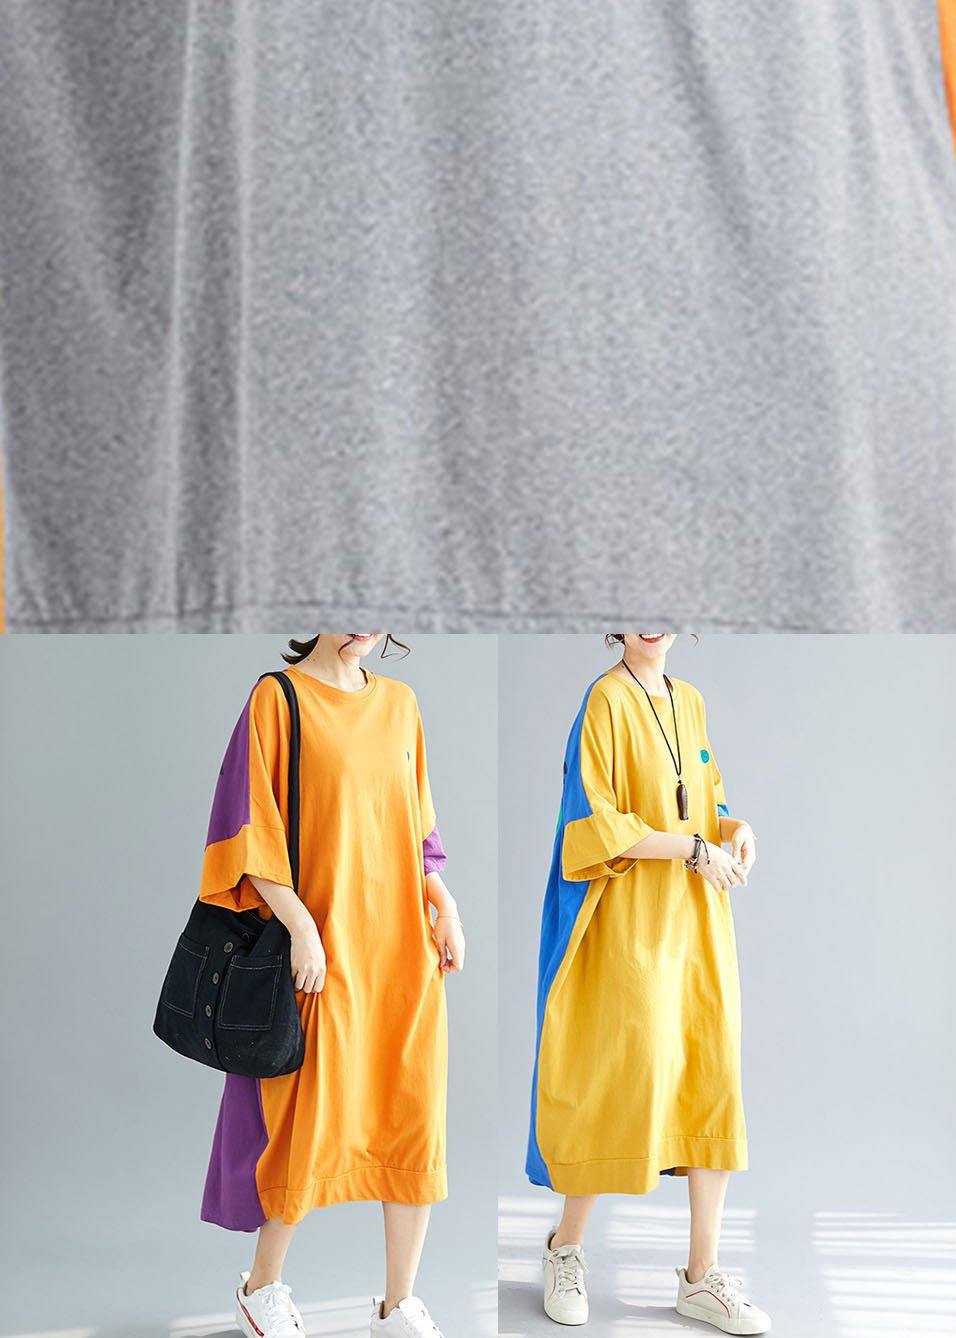 Bohemian Grey Patchwork Orange Low High Graphic Summer Half Sleeve Vacation Dress - Omychic